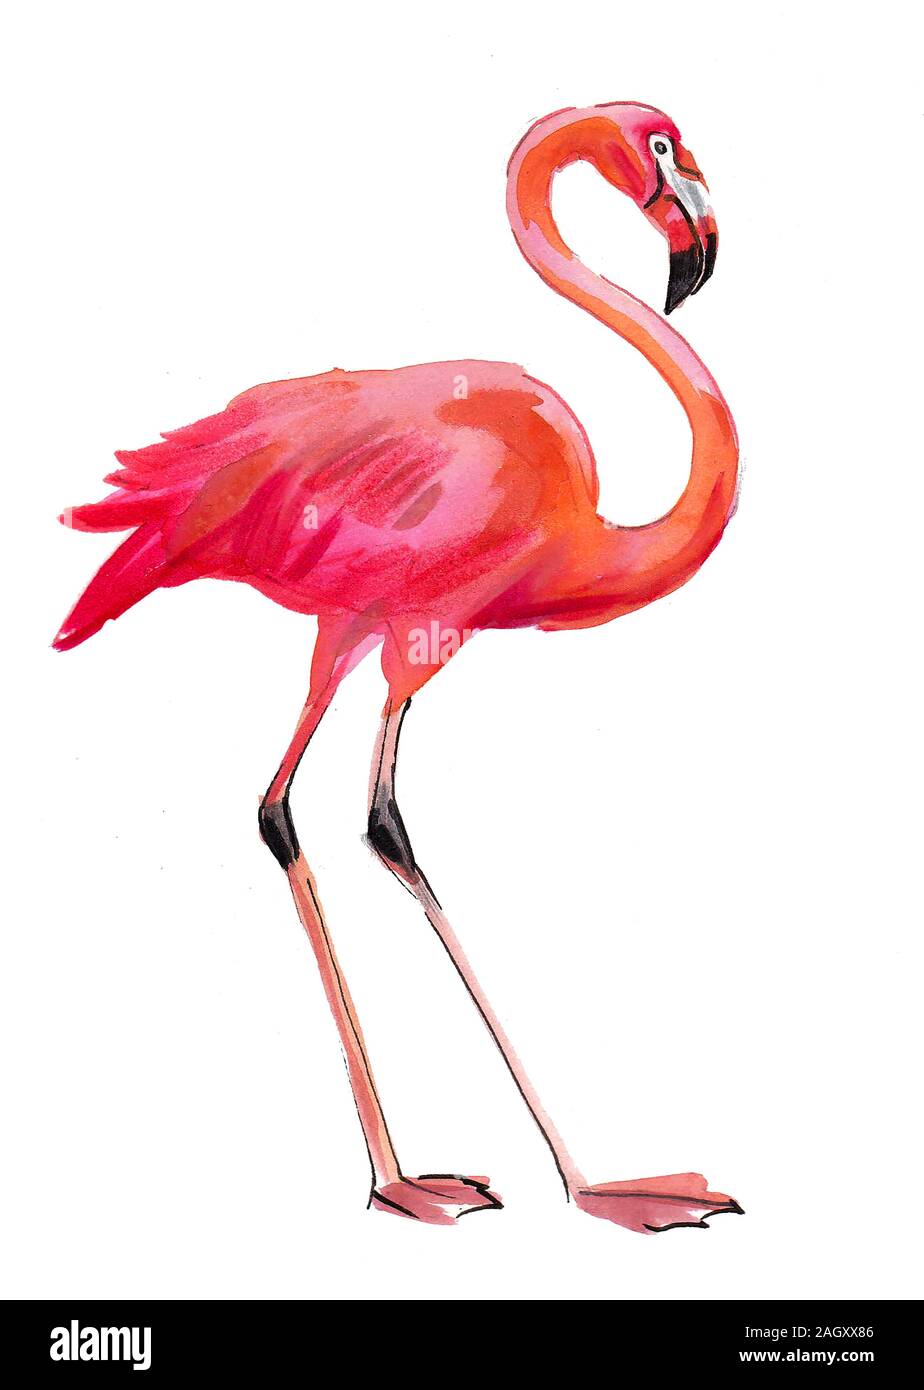 Flamingo bird on white background. Ink and watercolor illustration Stock  Photo - Alamy